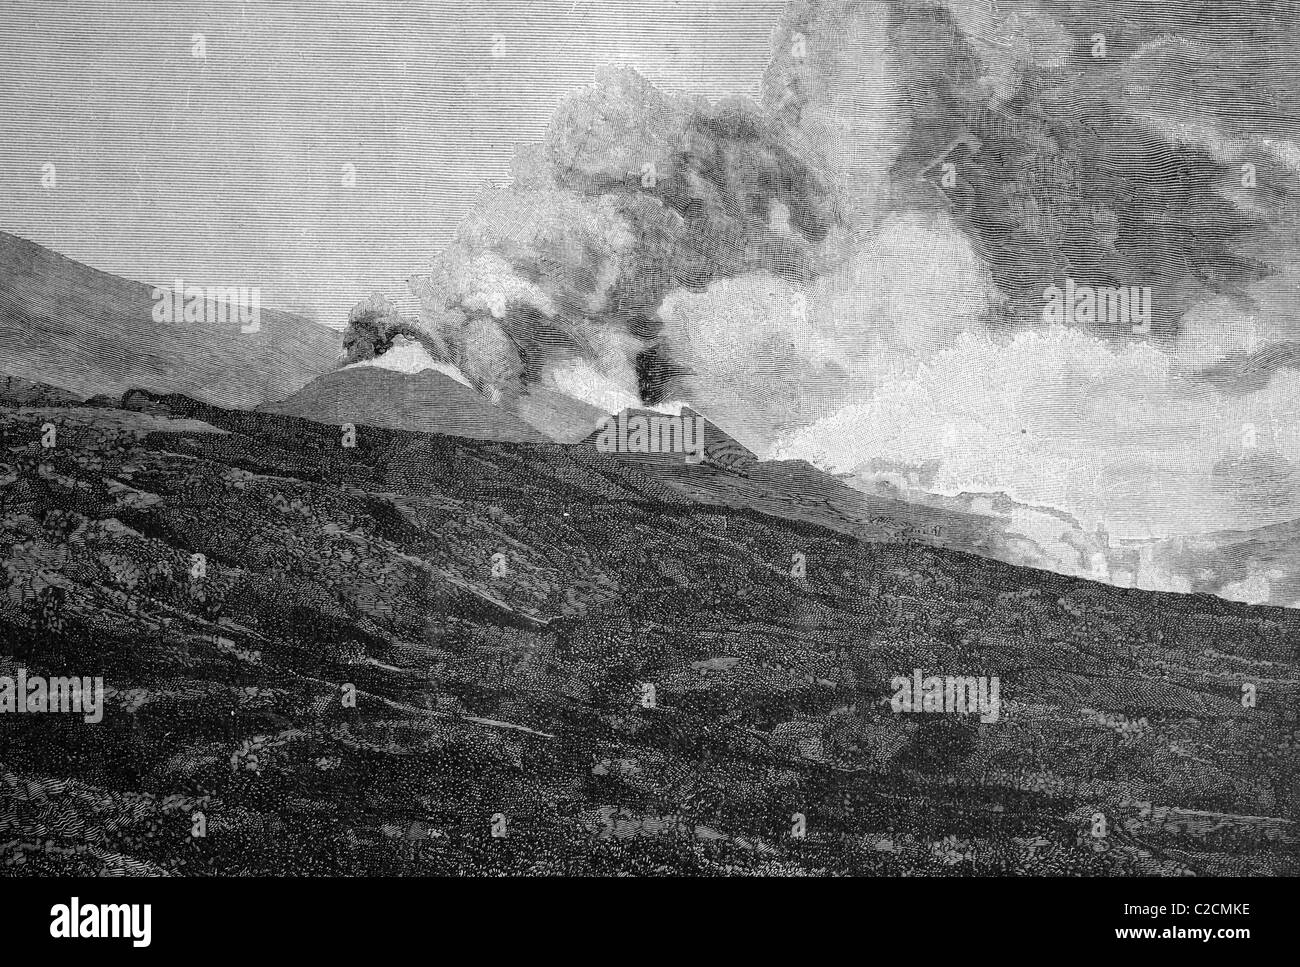 Eruption of Mount Etna, Sicily, Italy, historical illustration circa 1893 Stock Photo